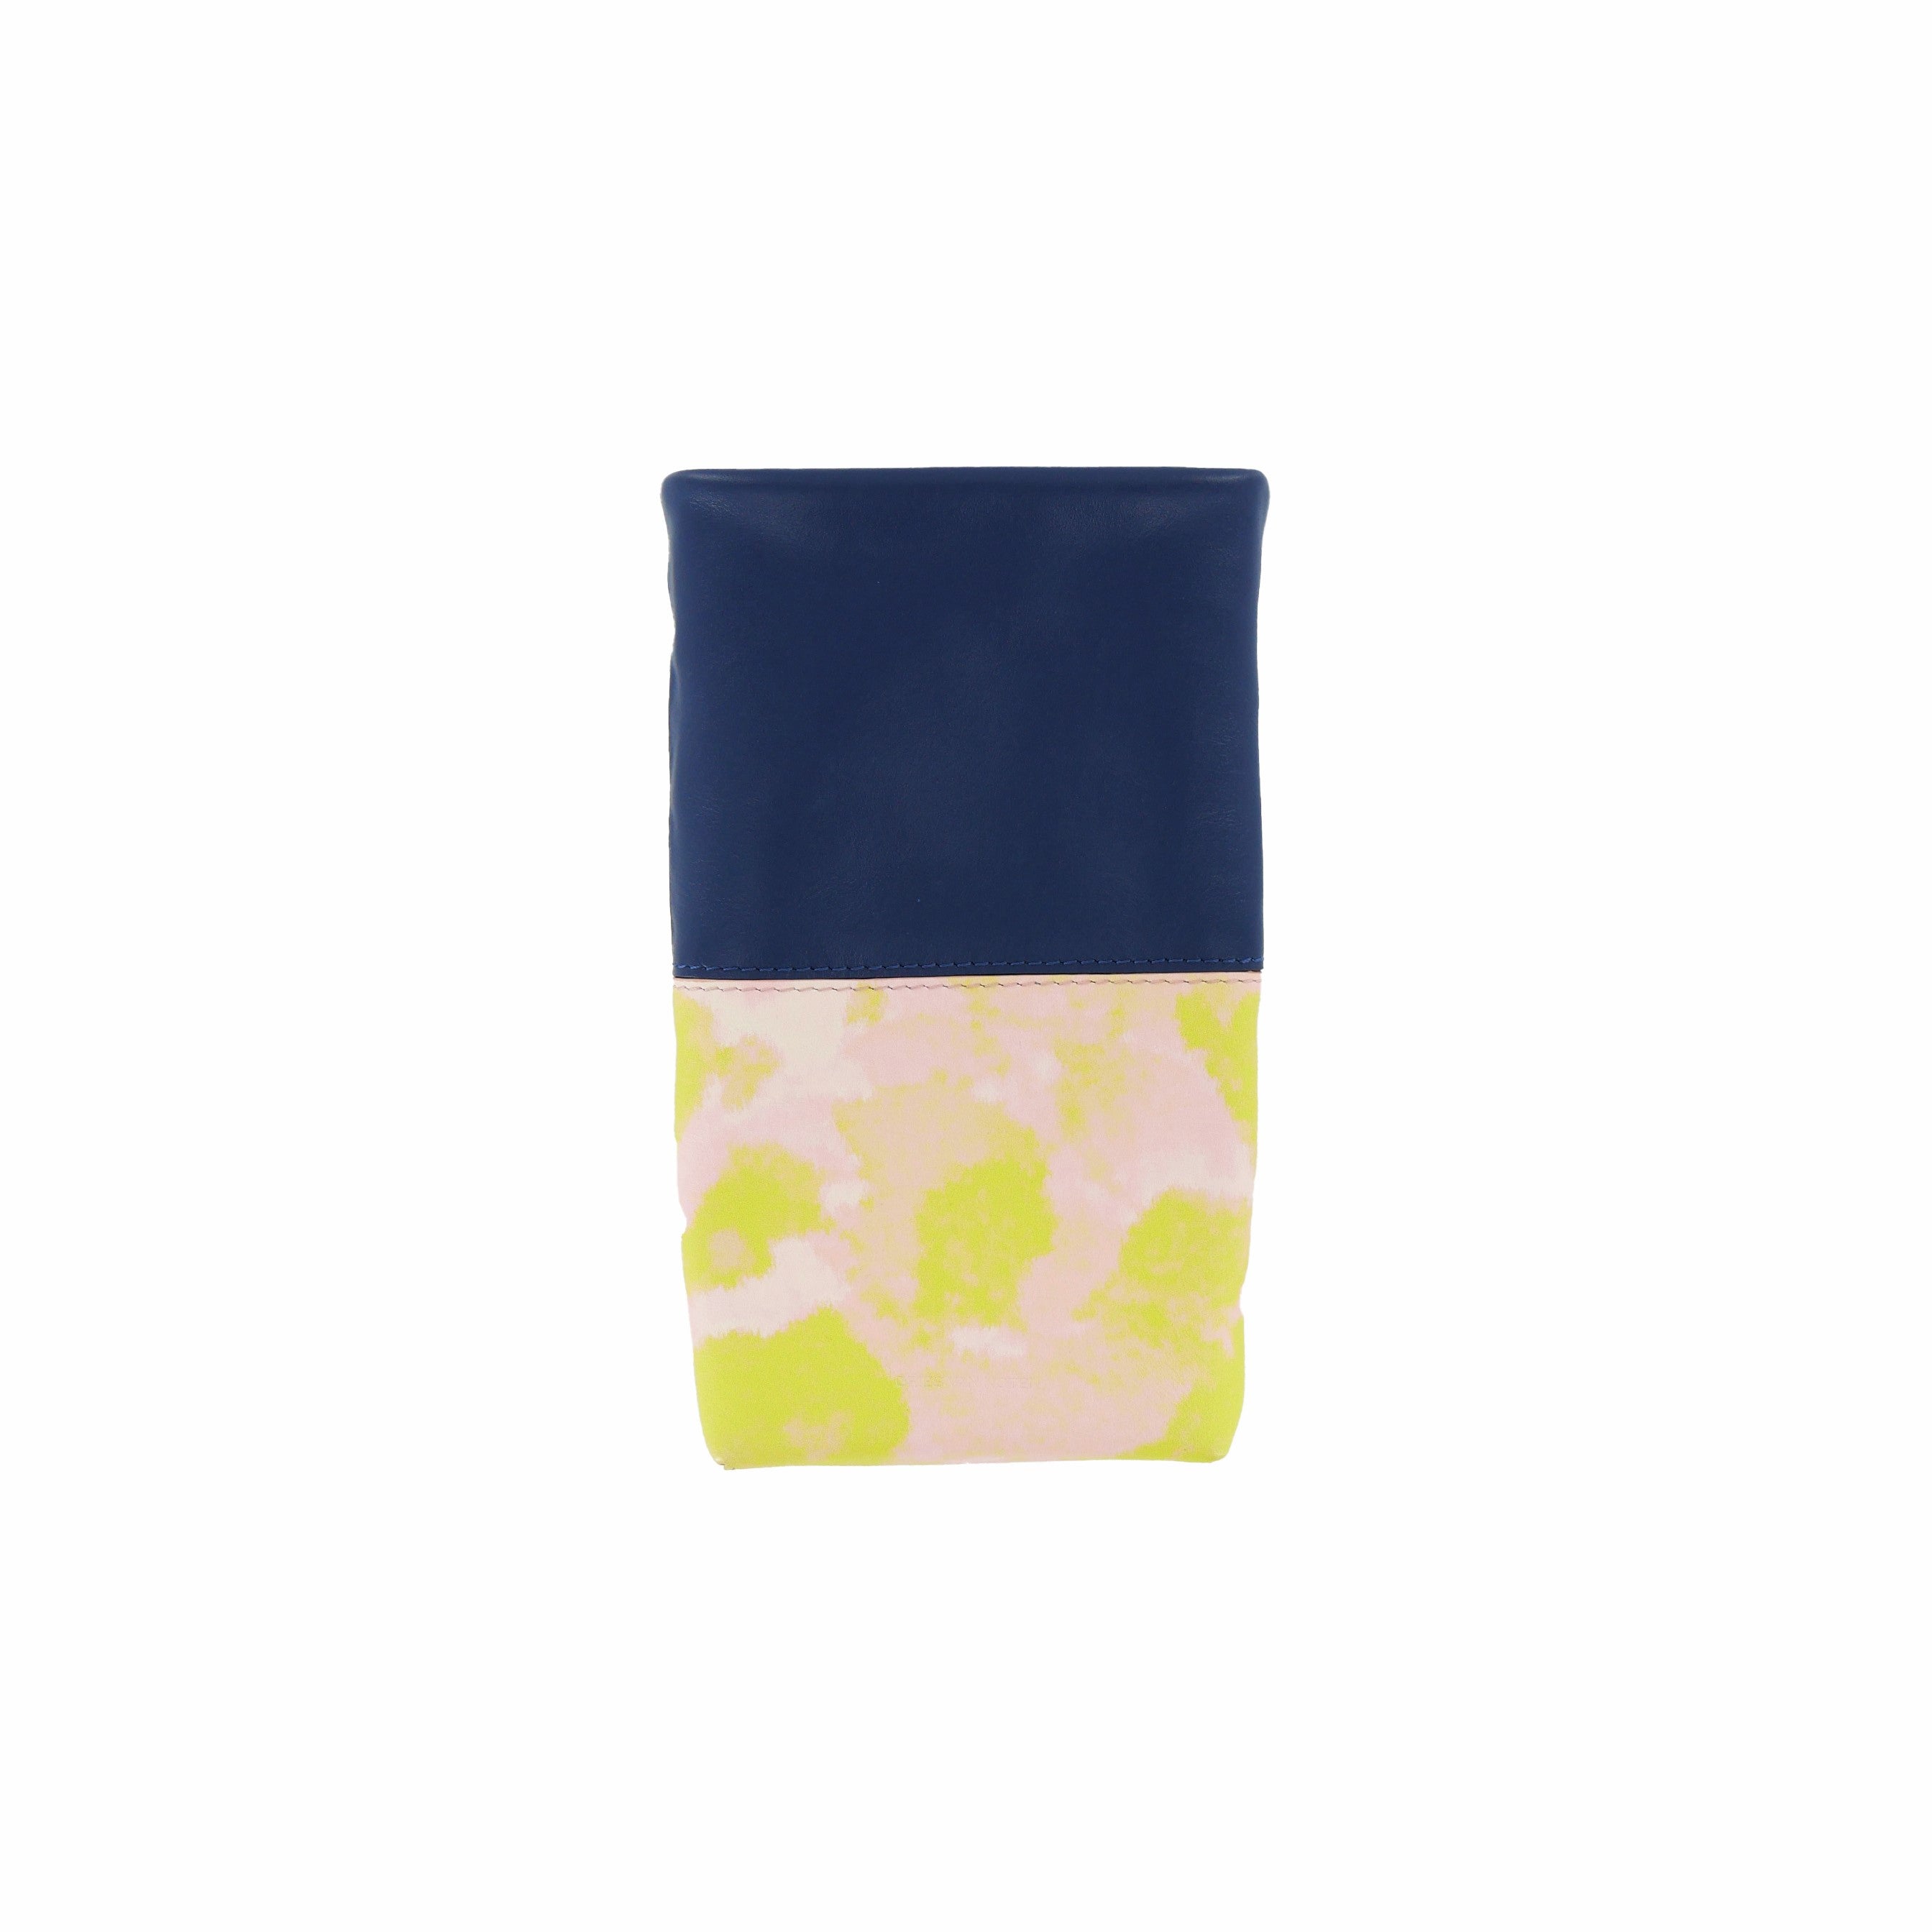 Dries Van Noten [ドリス ヴァン ノッテン] / Flower motif shoulder pouch (blue) [フラワー モチーフ ショルダーポーチ]